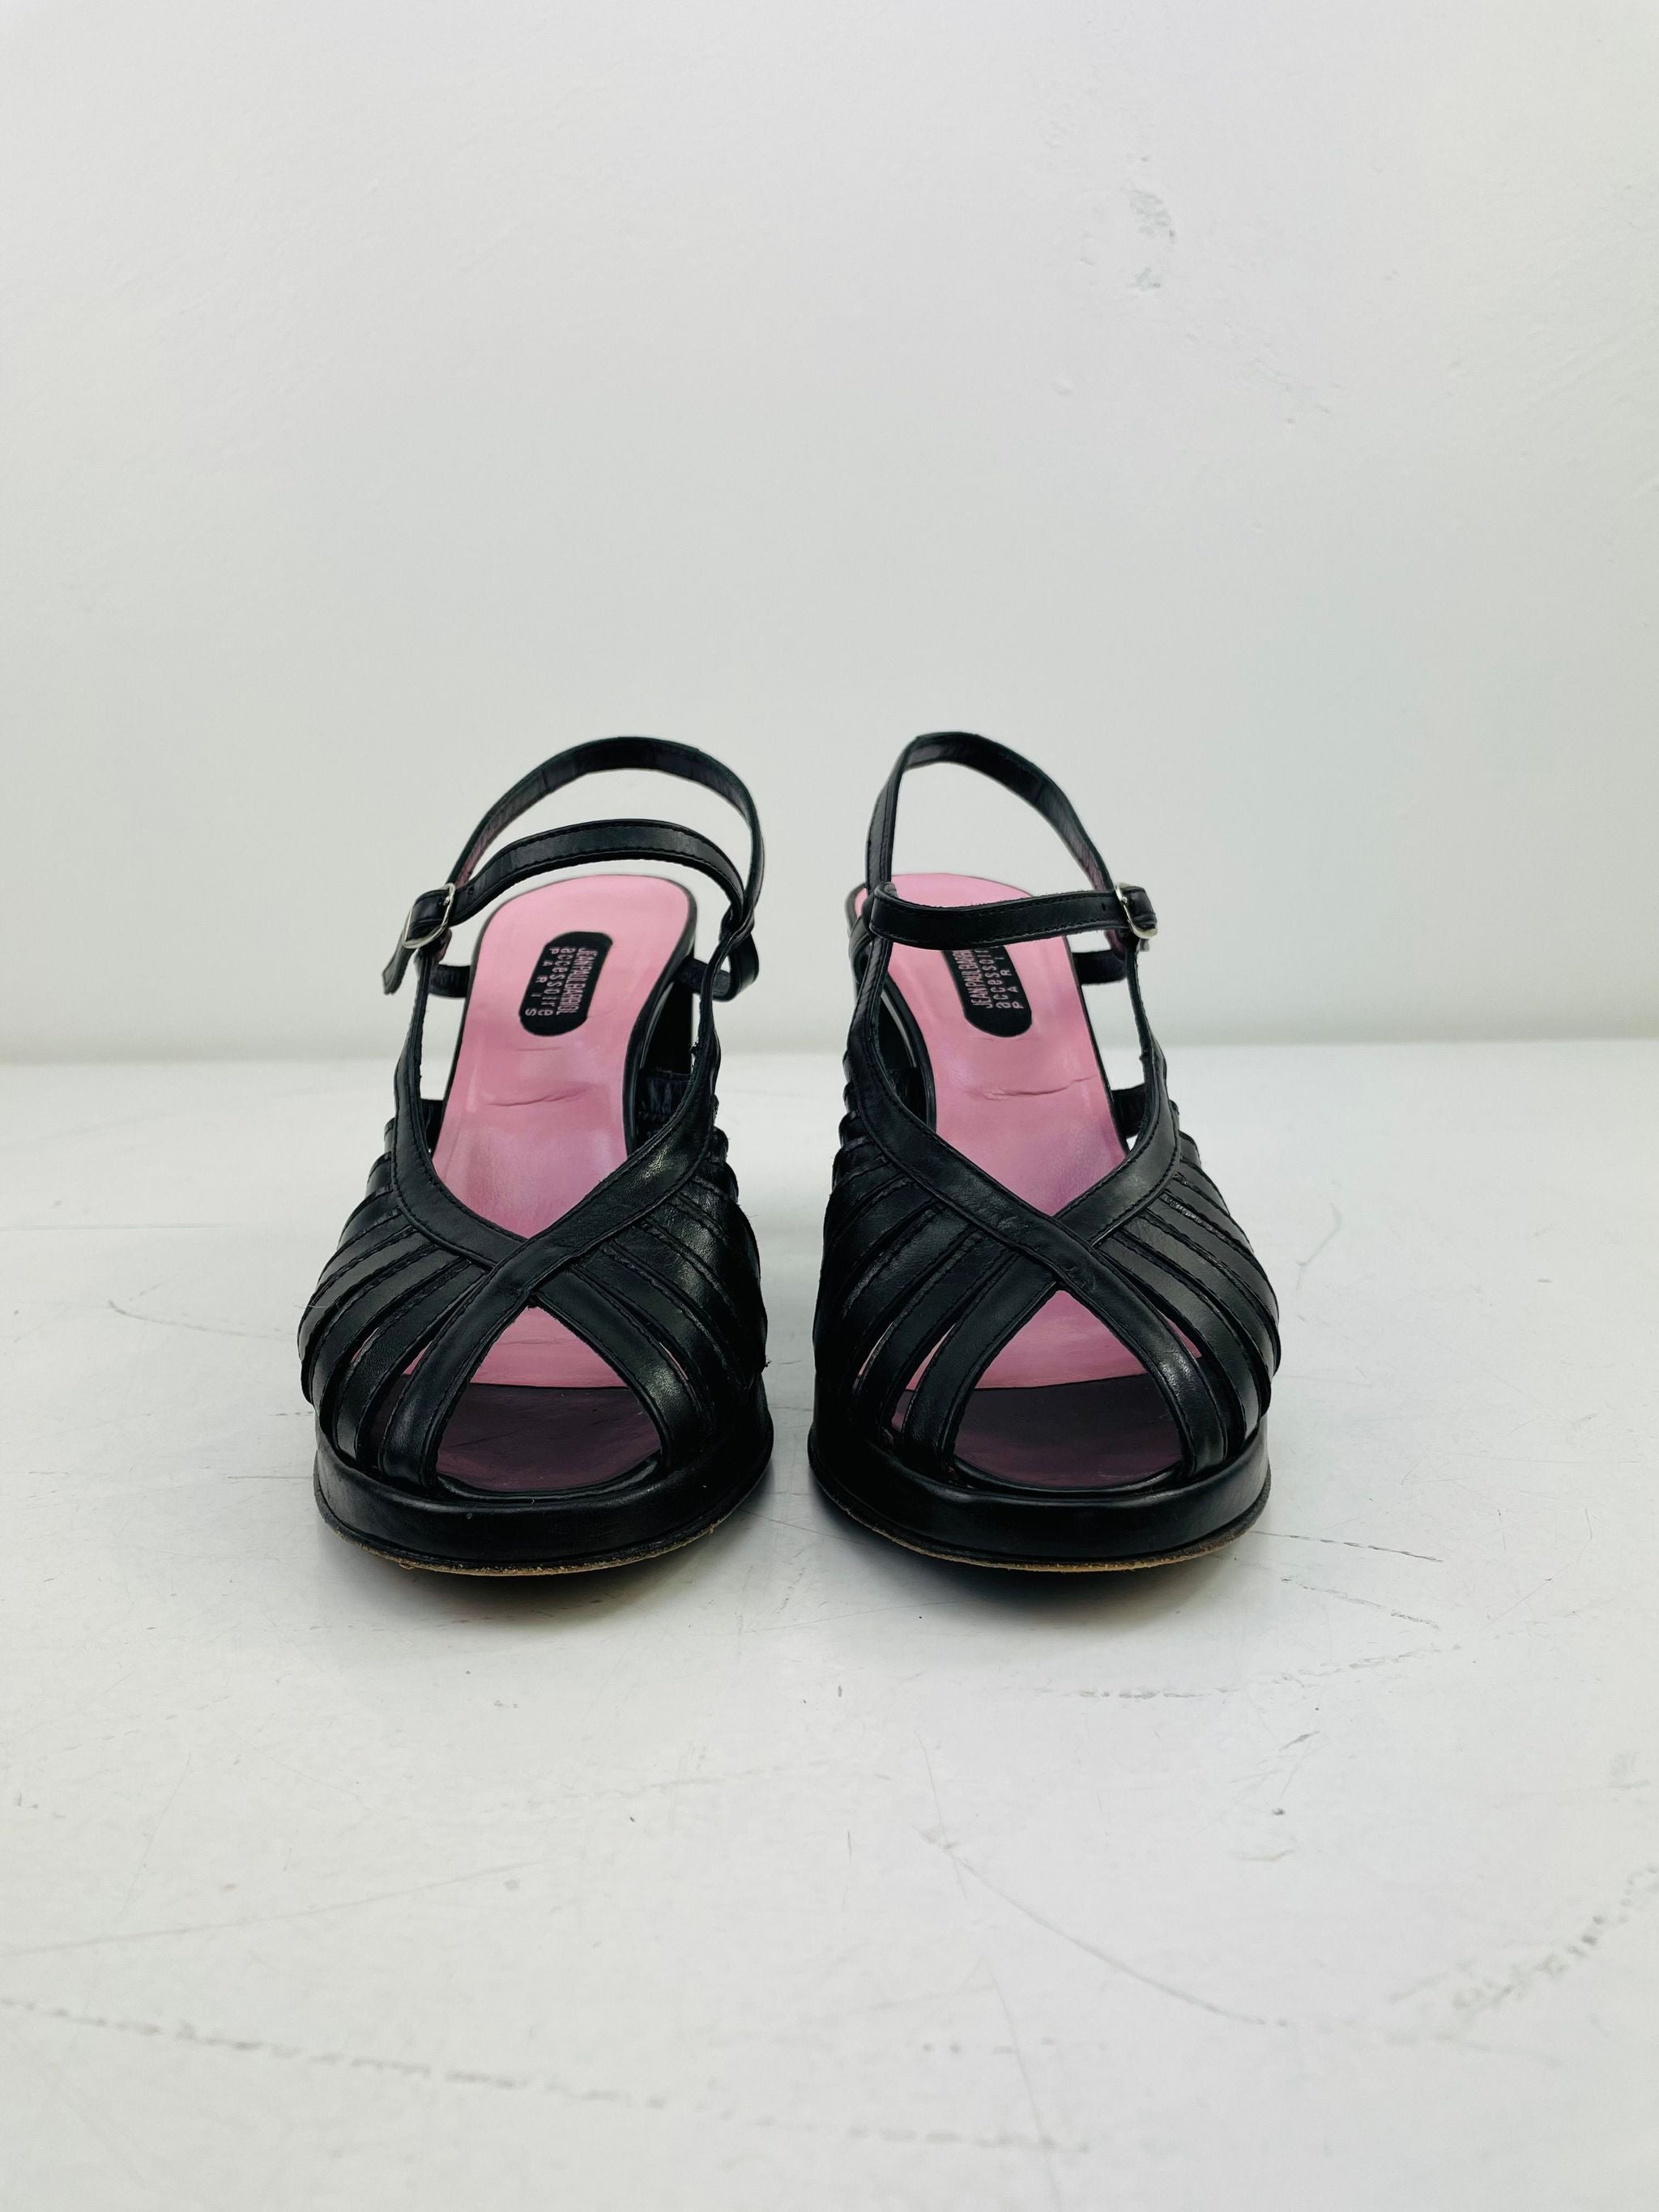 Barneys New York Wedge Sandals 